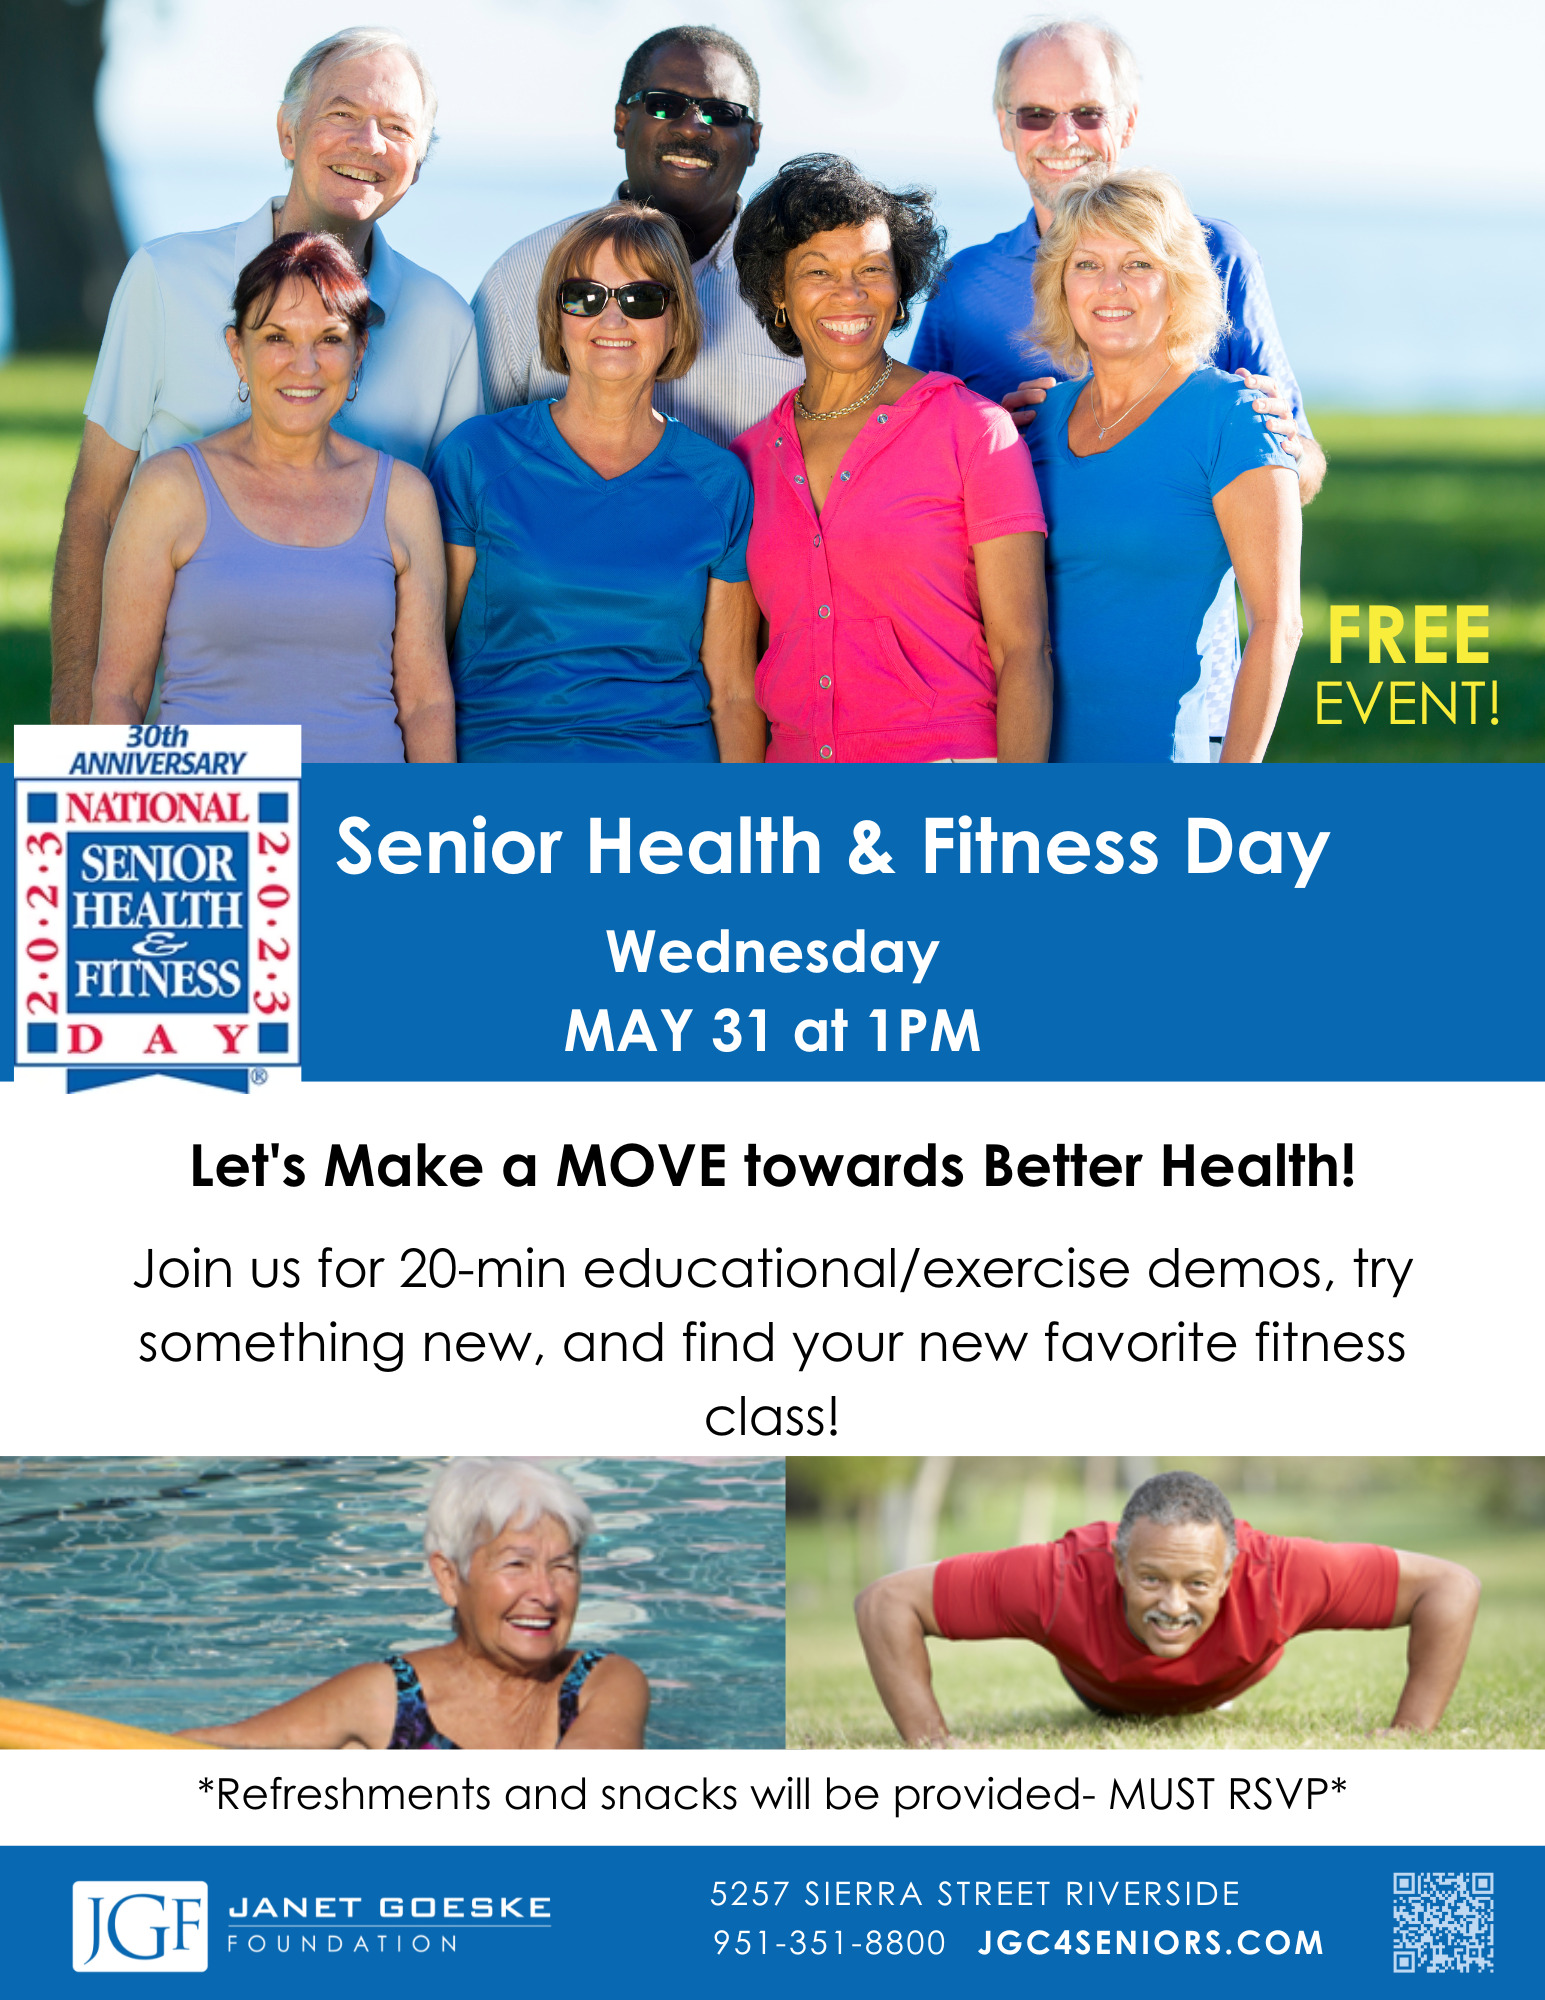 Janet Goeske Foundation – National Senior Health& Fitness Day